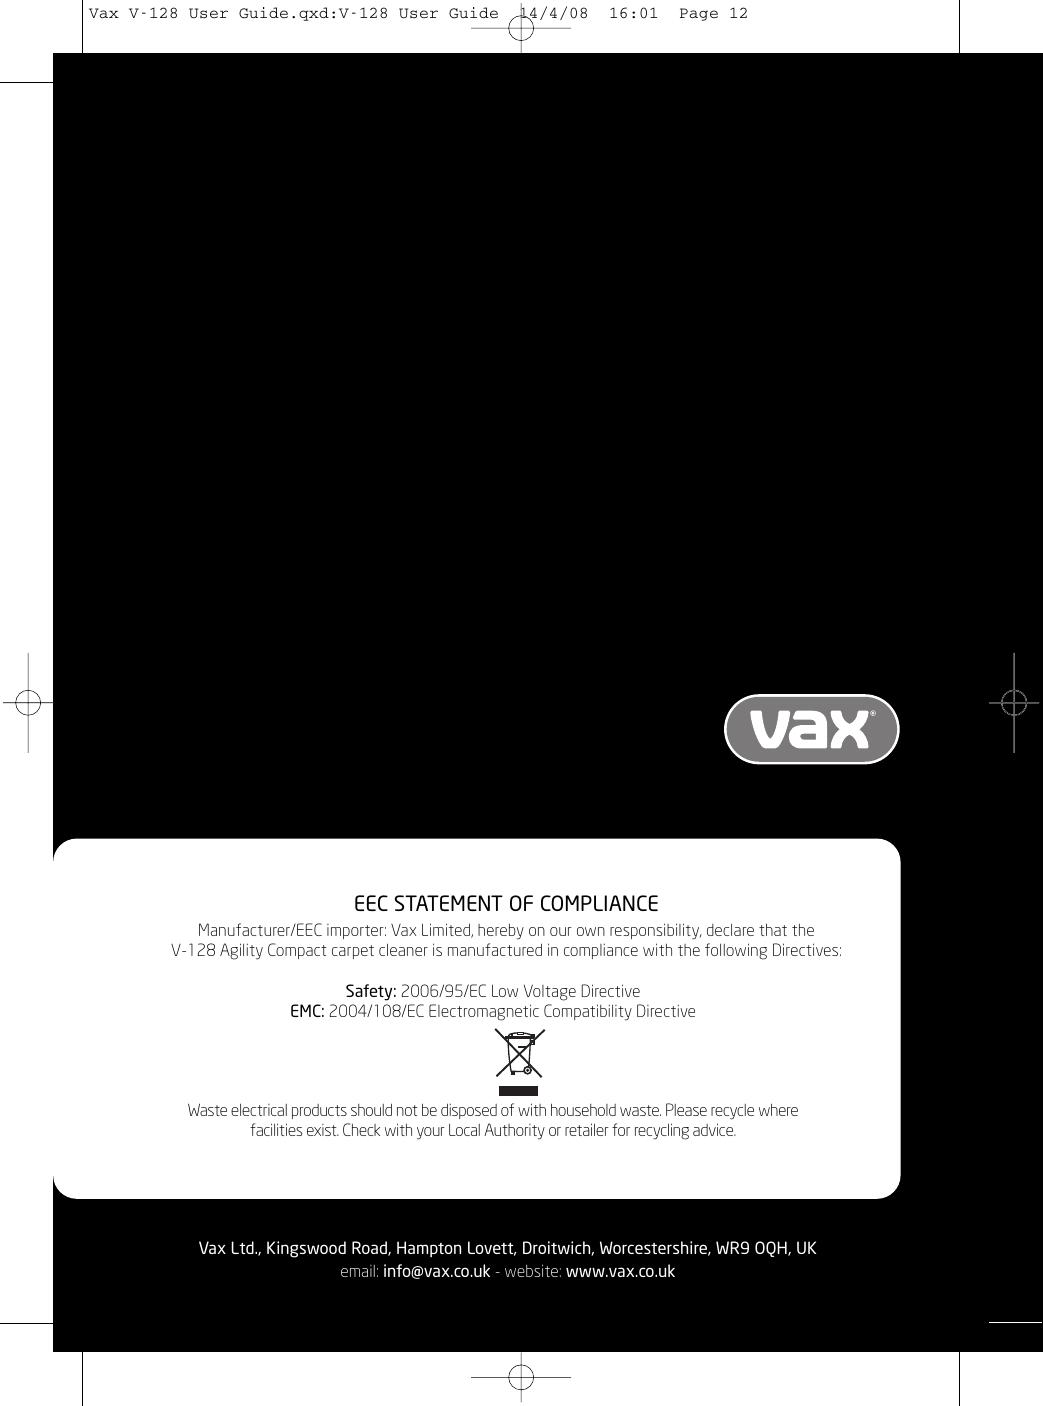 Page 12 of 12 - Vizio Vizio-V-128-Users-Manual- Vax V-128 Agility Carpet Washer  Vizio-v-128-users-manual